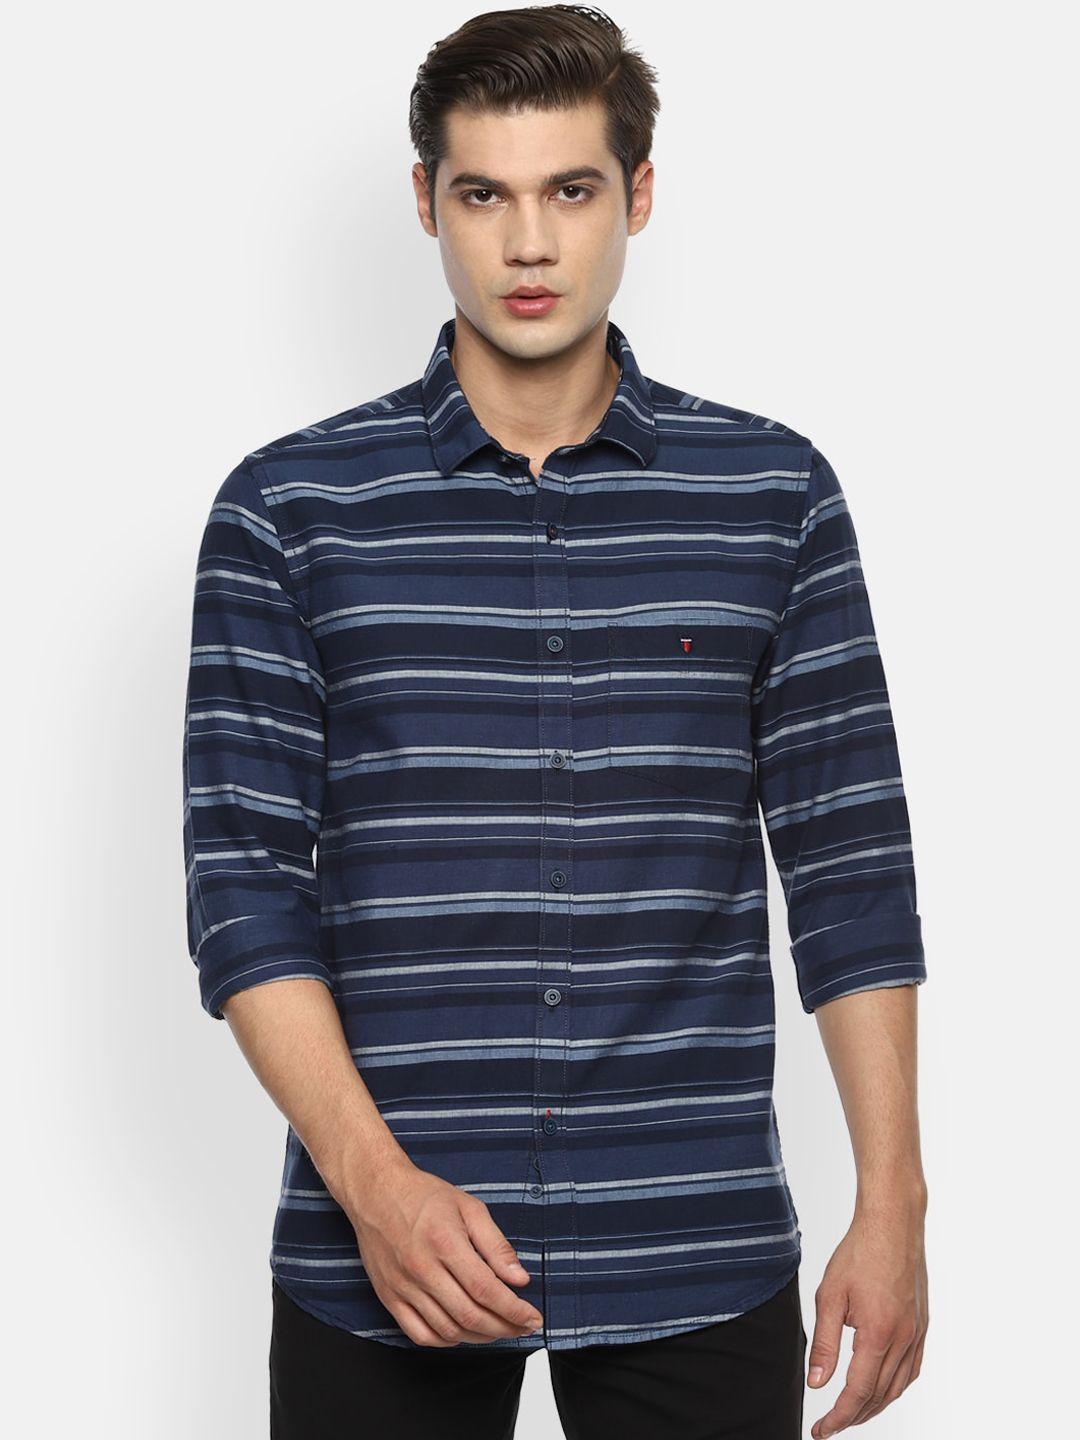 louis philippe sport men navy blue slim fit multi stripes striped casual shirt